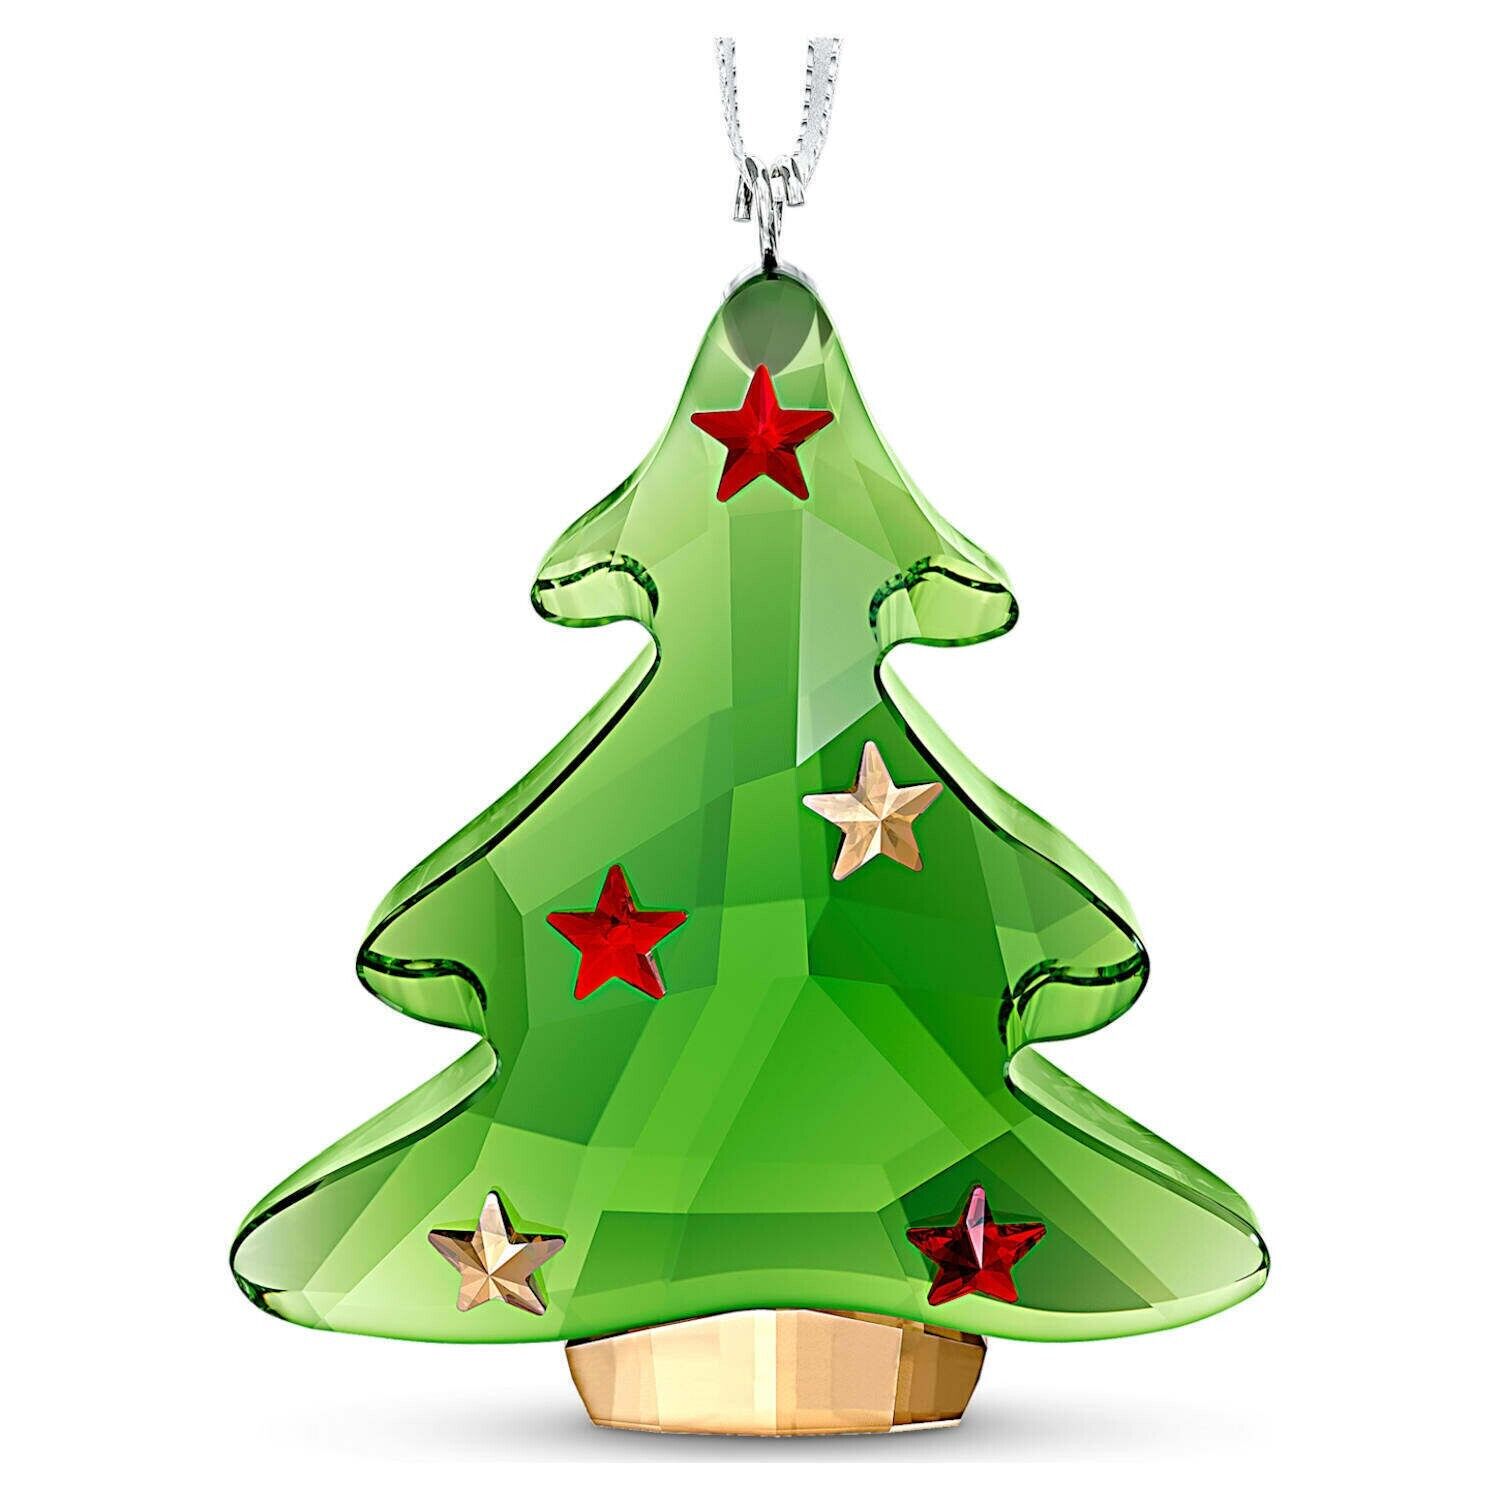 Swarovski Green Christmas Tree Ornament #5544526 New in Box